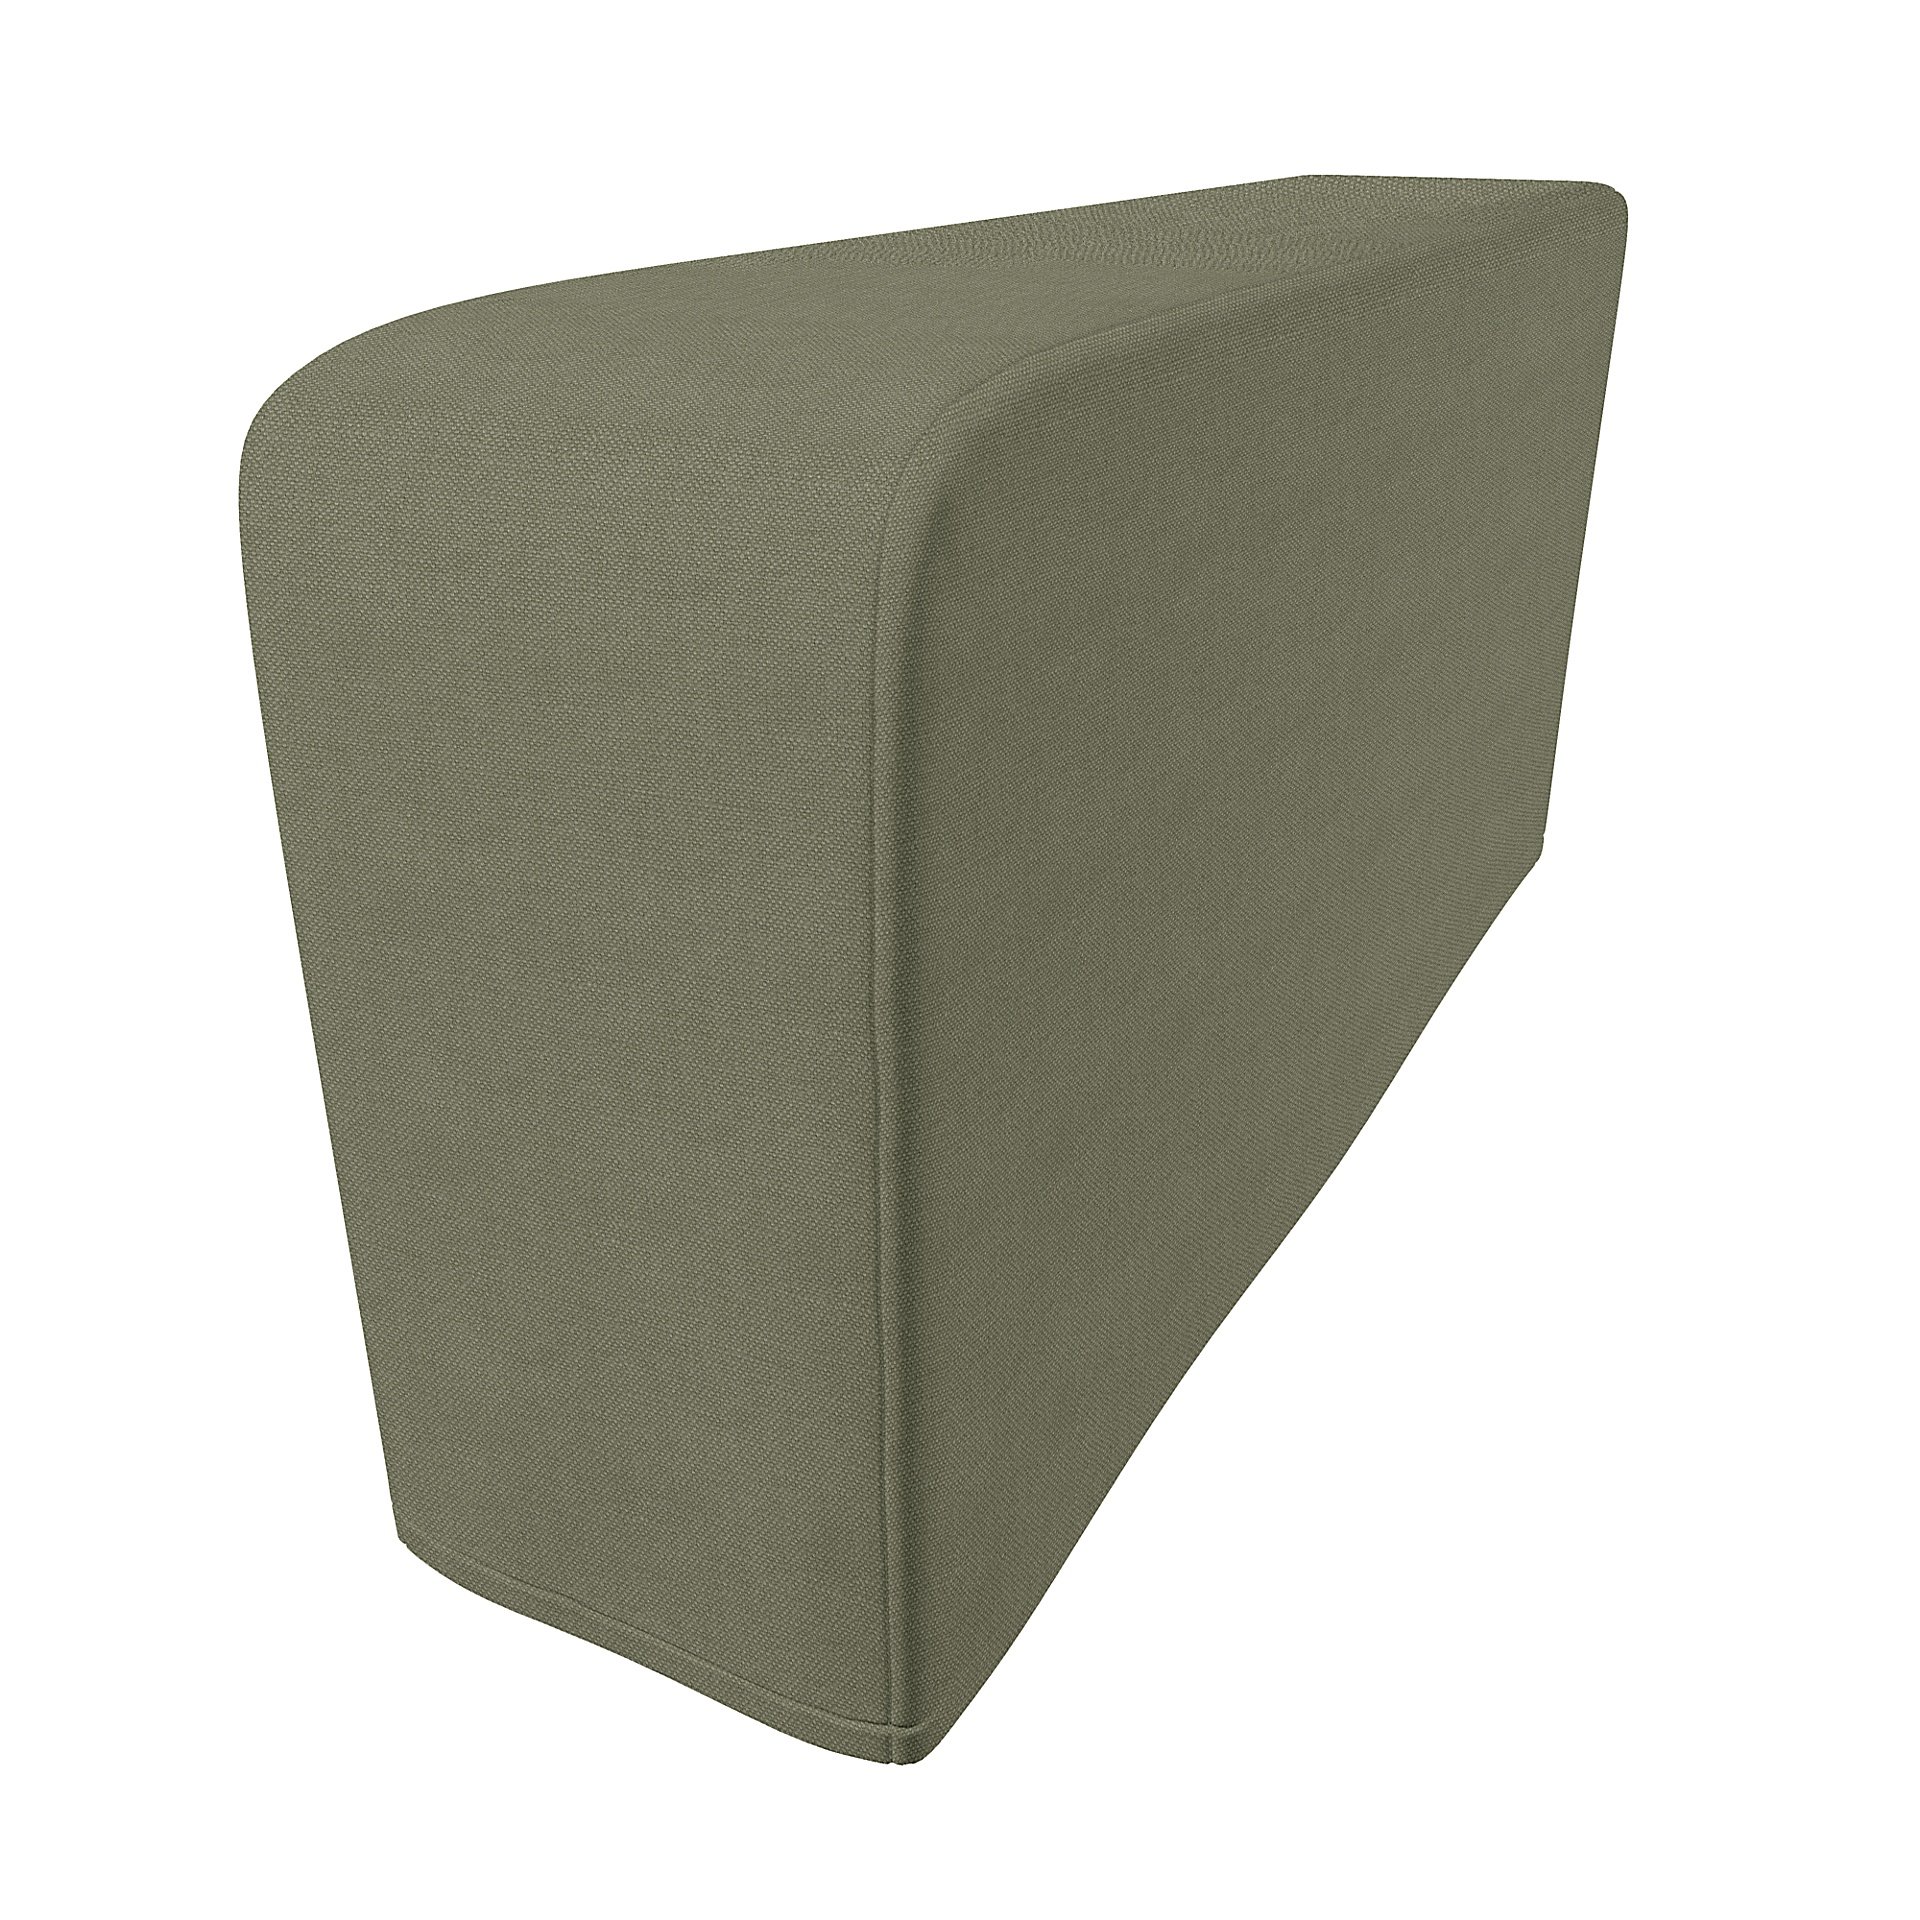 IKEA - Klippan Armrest Protectors (One pair), Sage, Linen - Bemz